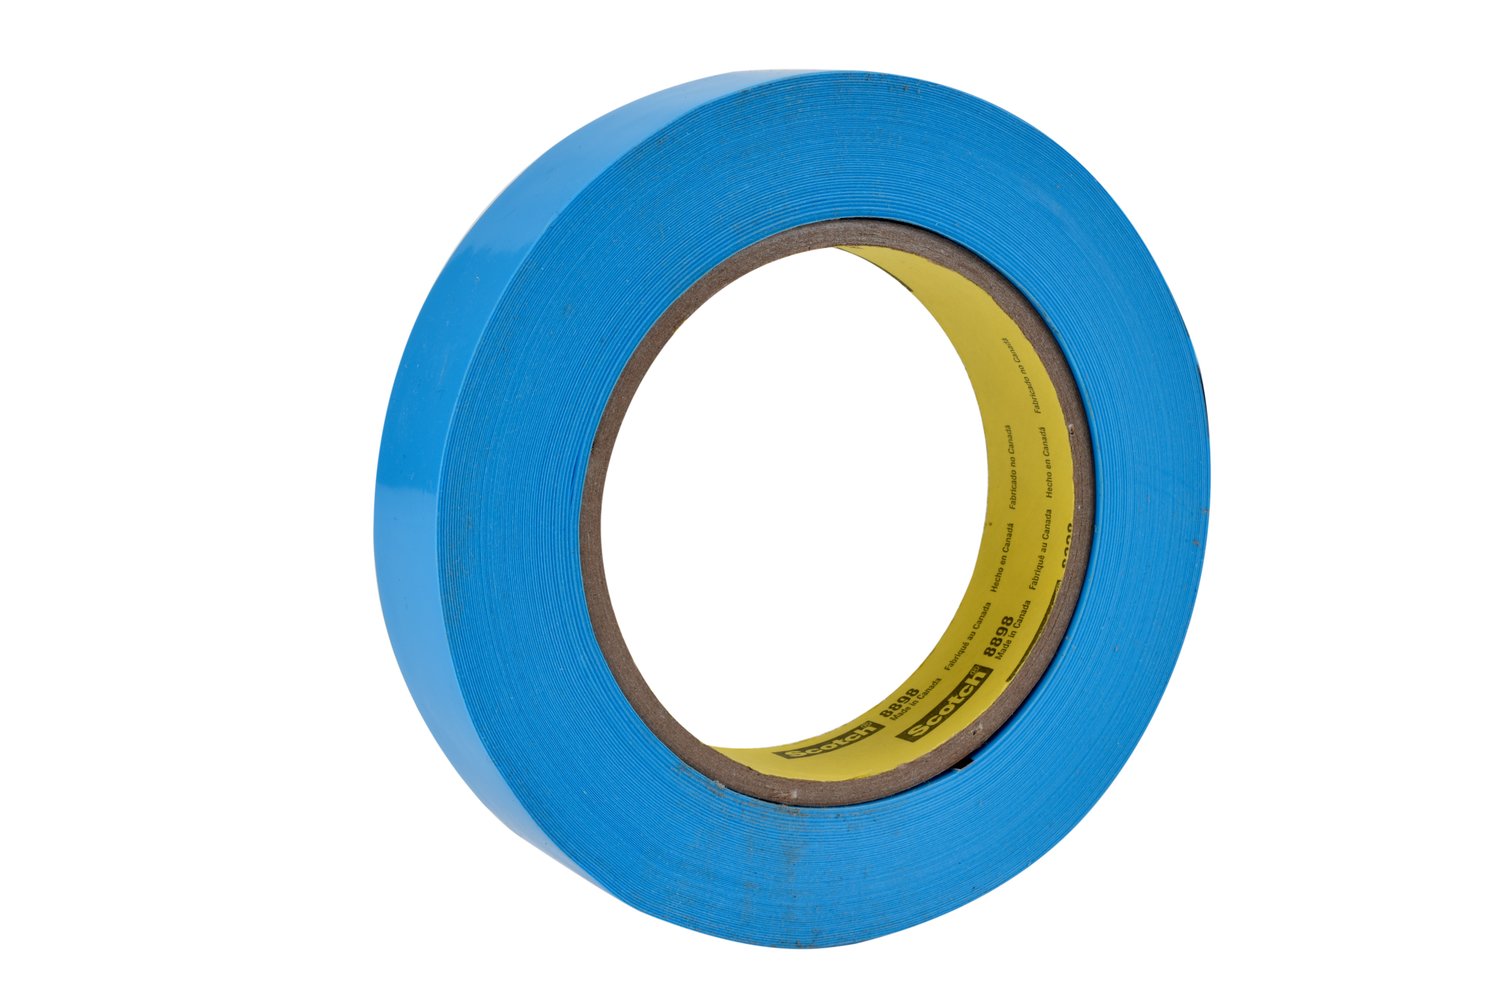 7000048850 - Scotch Strapping Tape 8898, Blue, 24 mm x 55 m, 4.6 mil, 36 rolls per
case